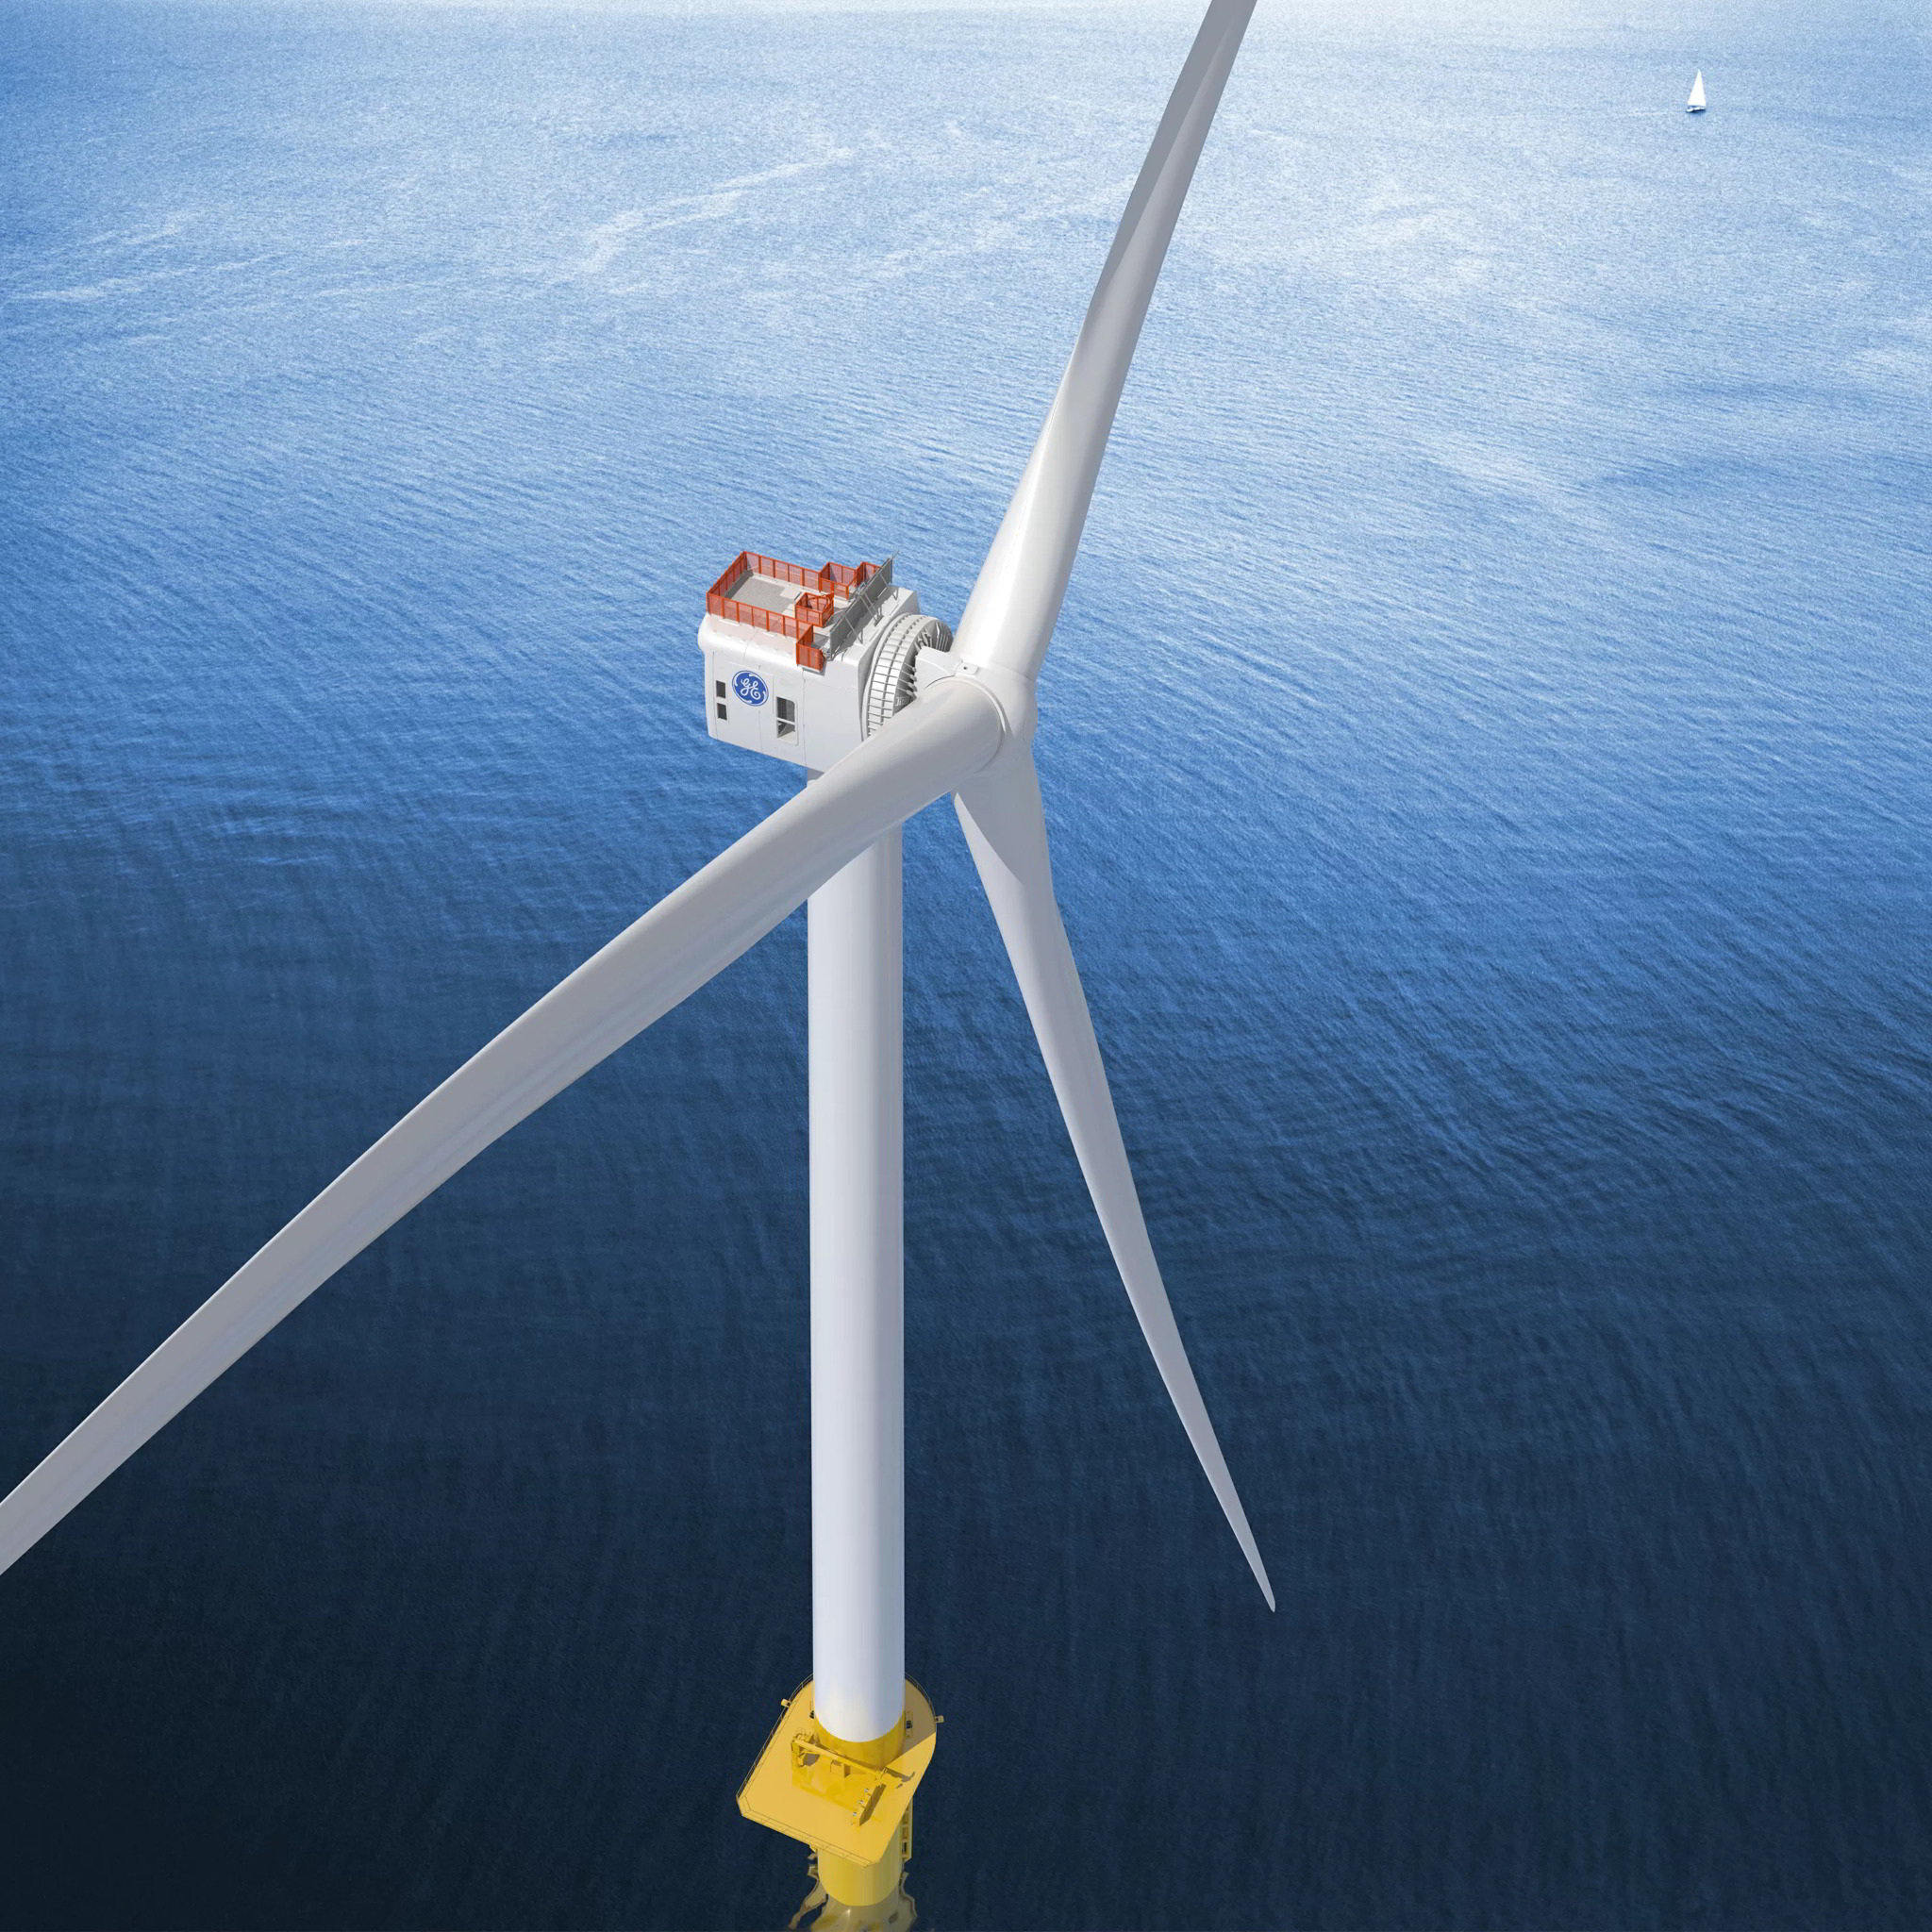 GE's offshore wind turbine